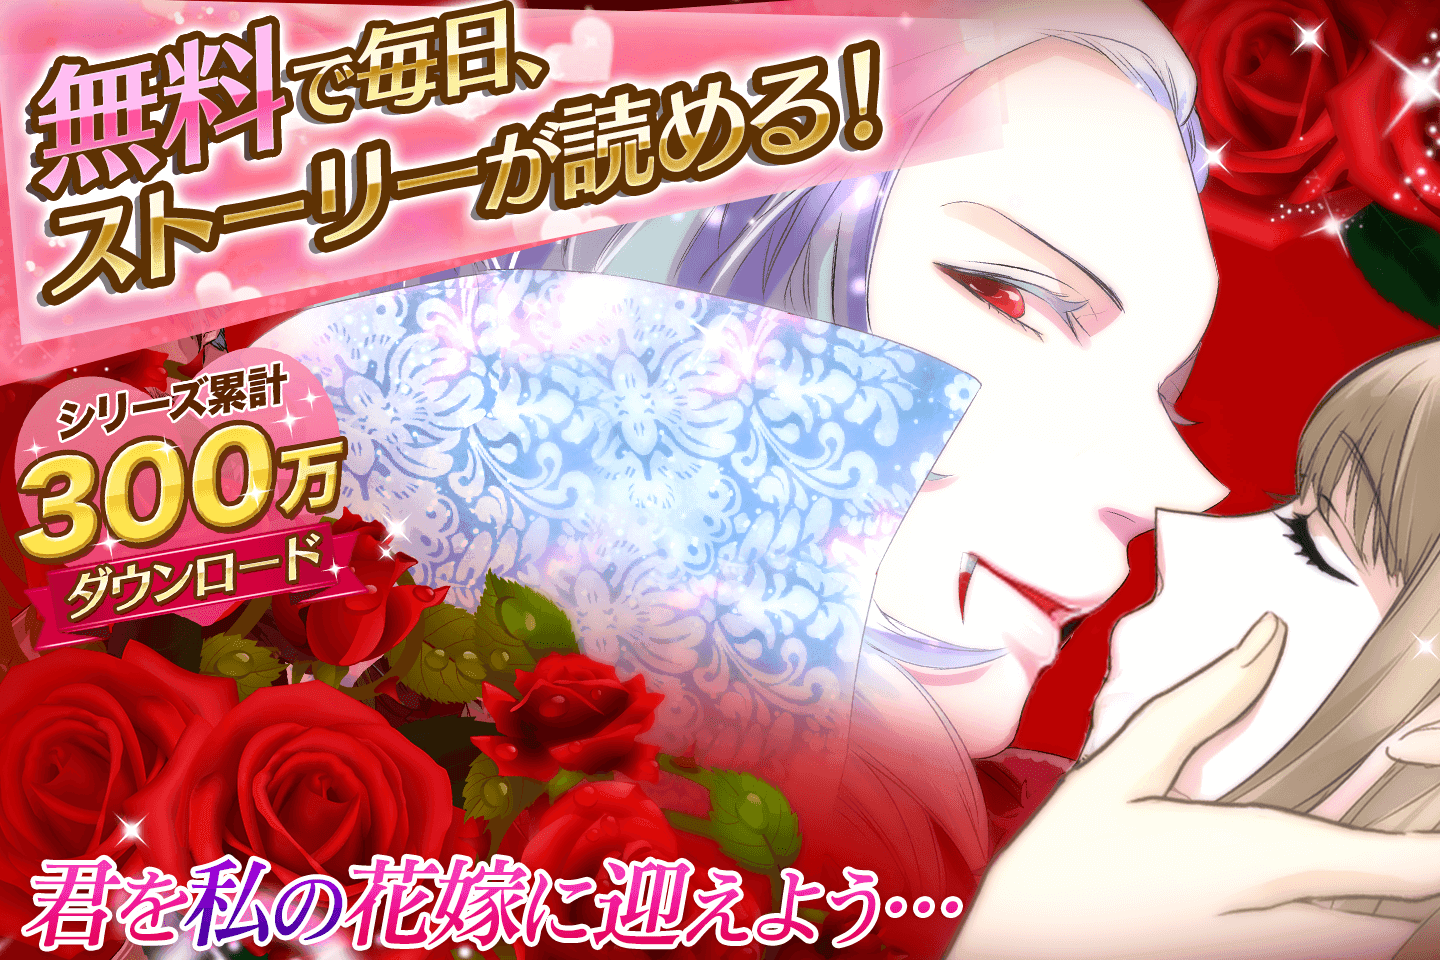 Screenshot 1 of Vampire Kiss เกมโรแมนติกฟรีสำหรับผู้หญิง! เกมโอโตเมะยอดนิยม 1.6.1